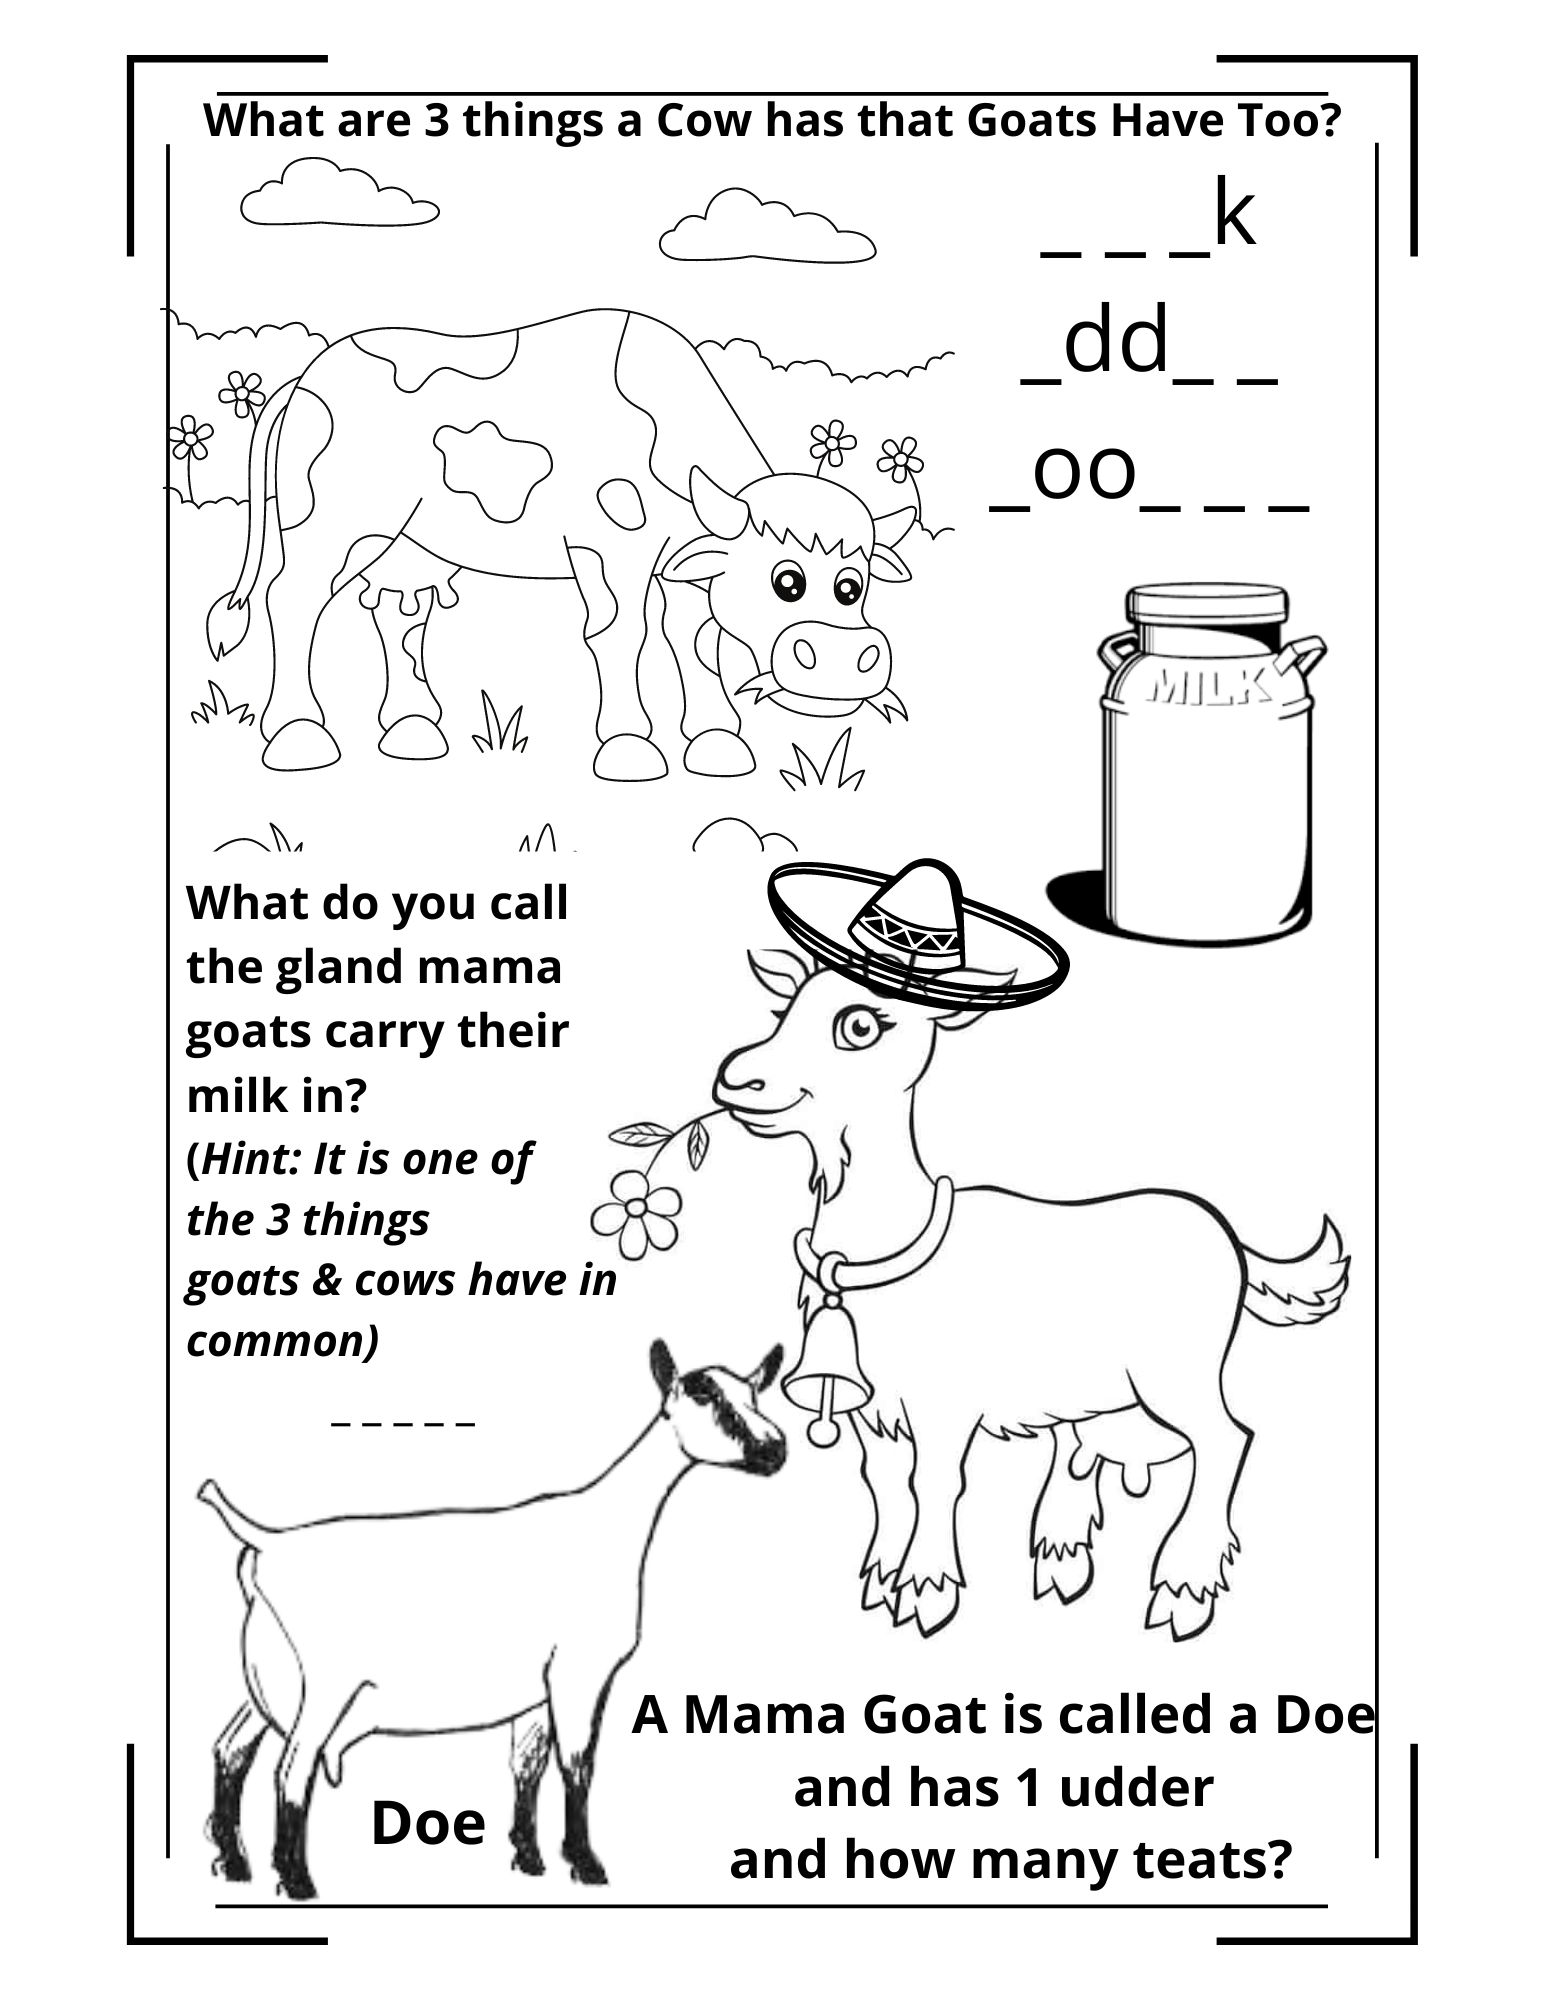 AppleJo Farms Goat Activity Coloring Book